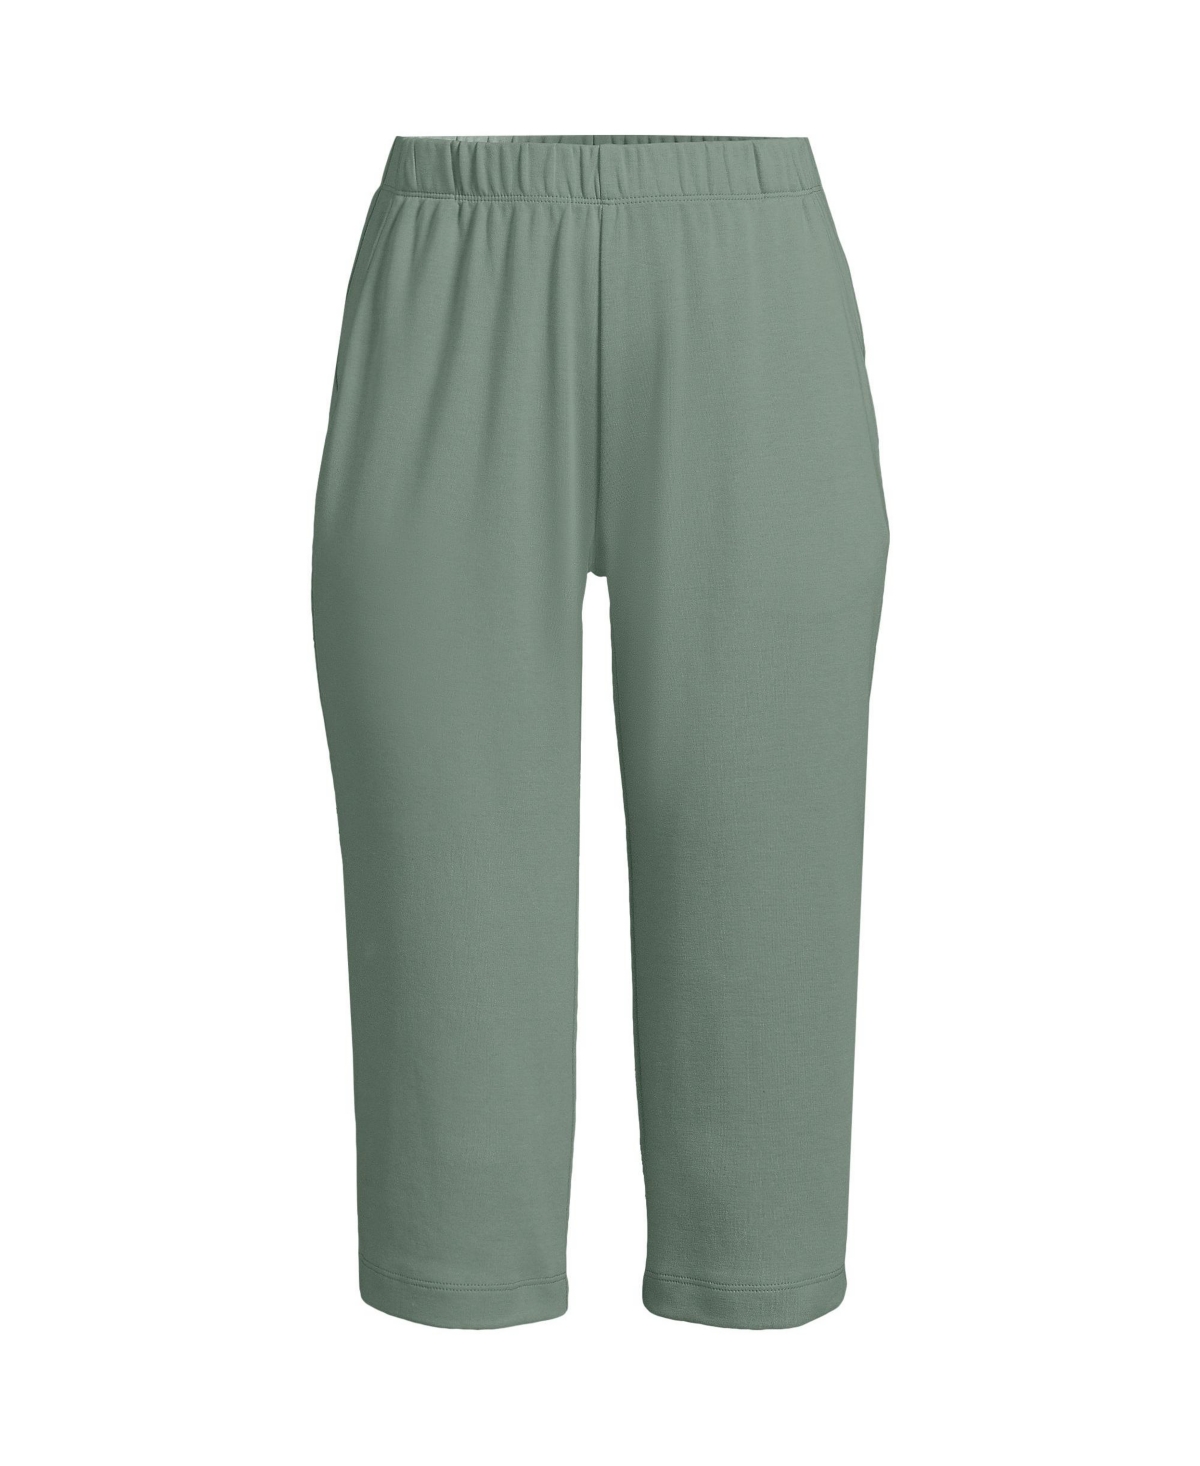 Plus Size Sport Knit High Rise Elastic Waist Capri Pants - Lily pad green